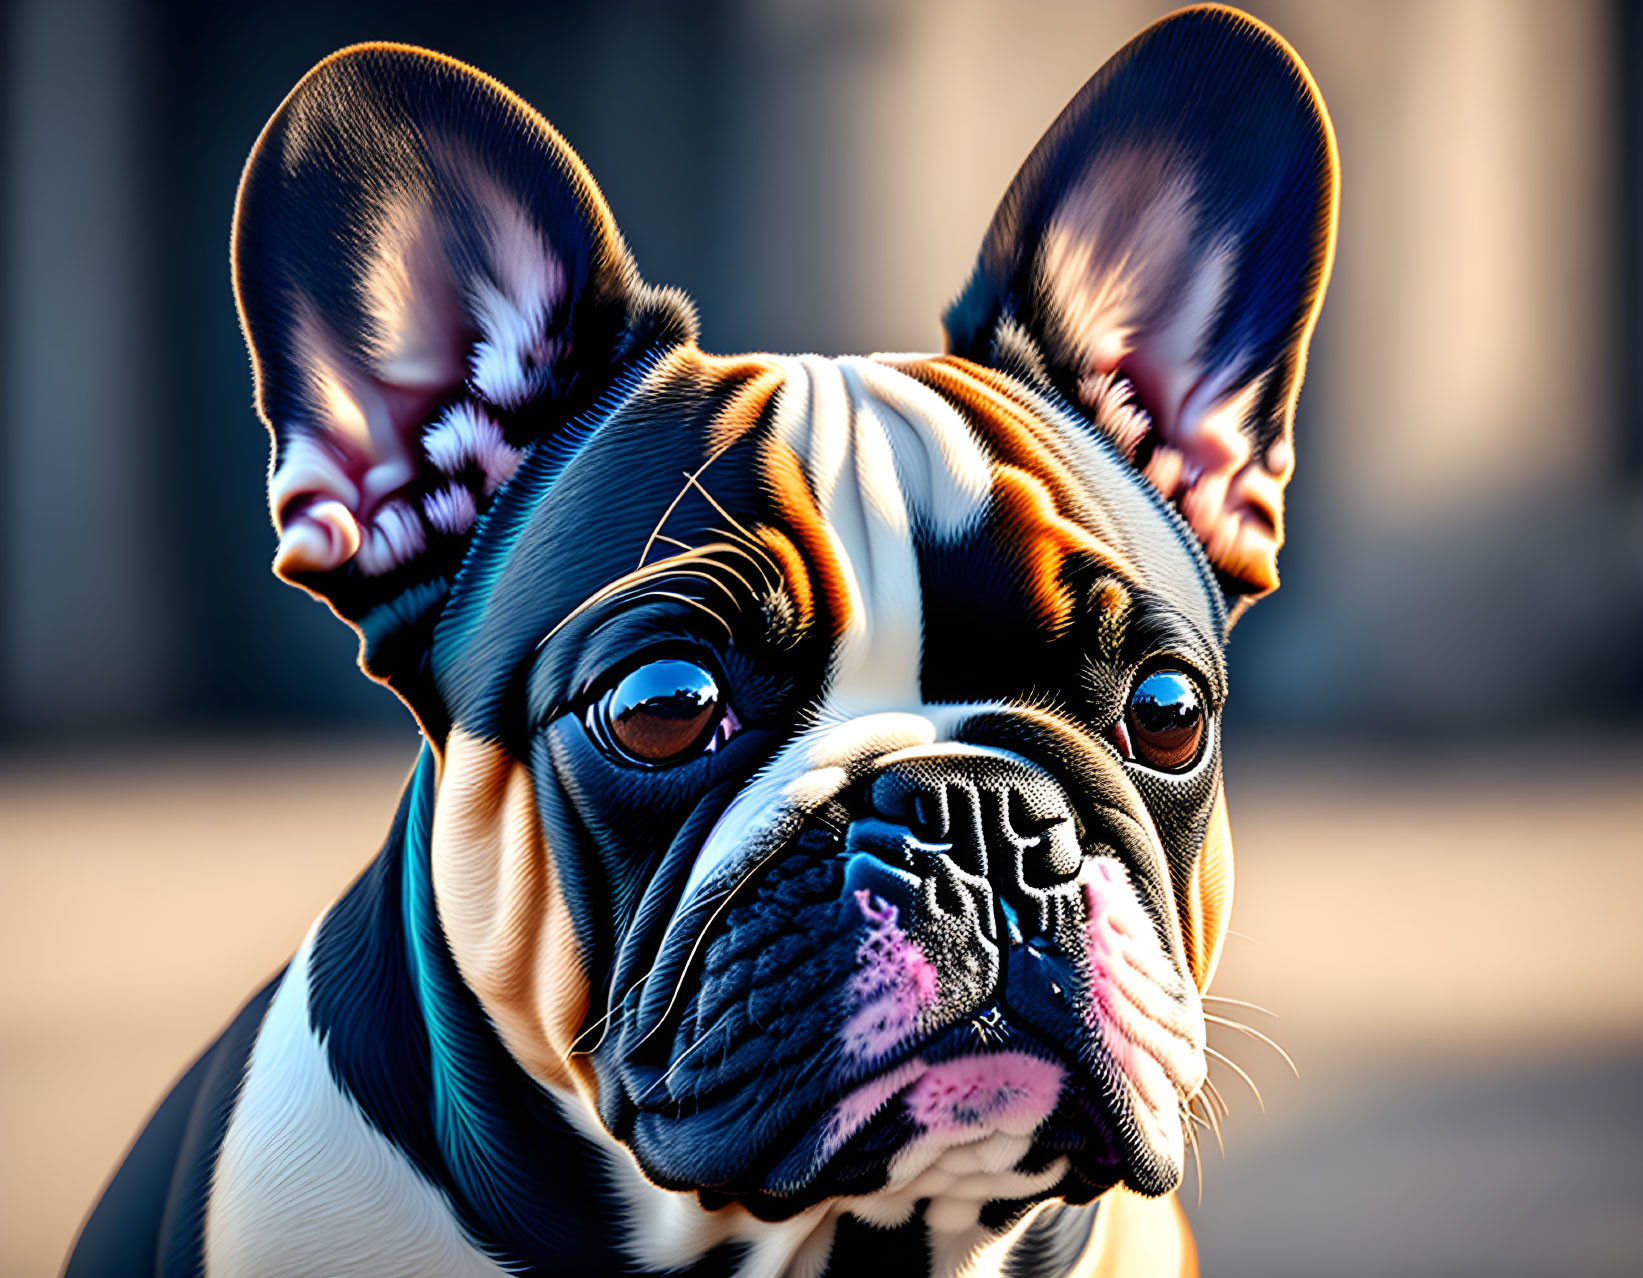 French Bulldog with Bat-Like Ears and Black/White Markings